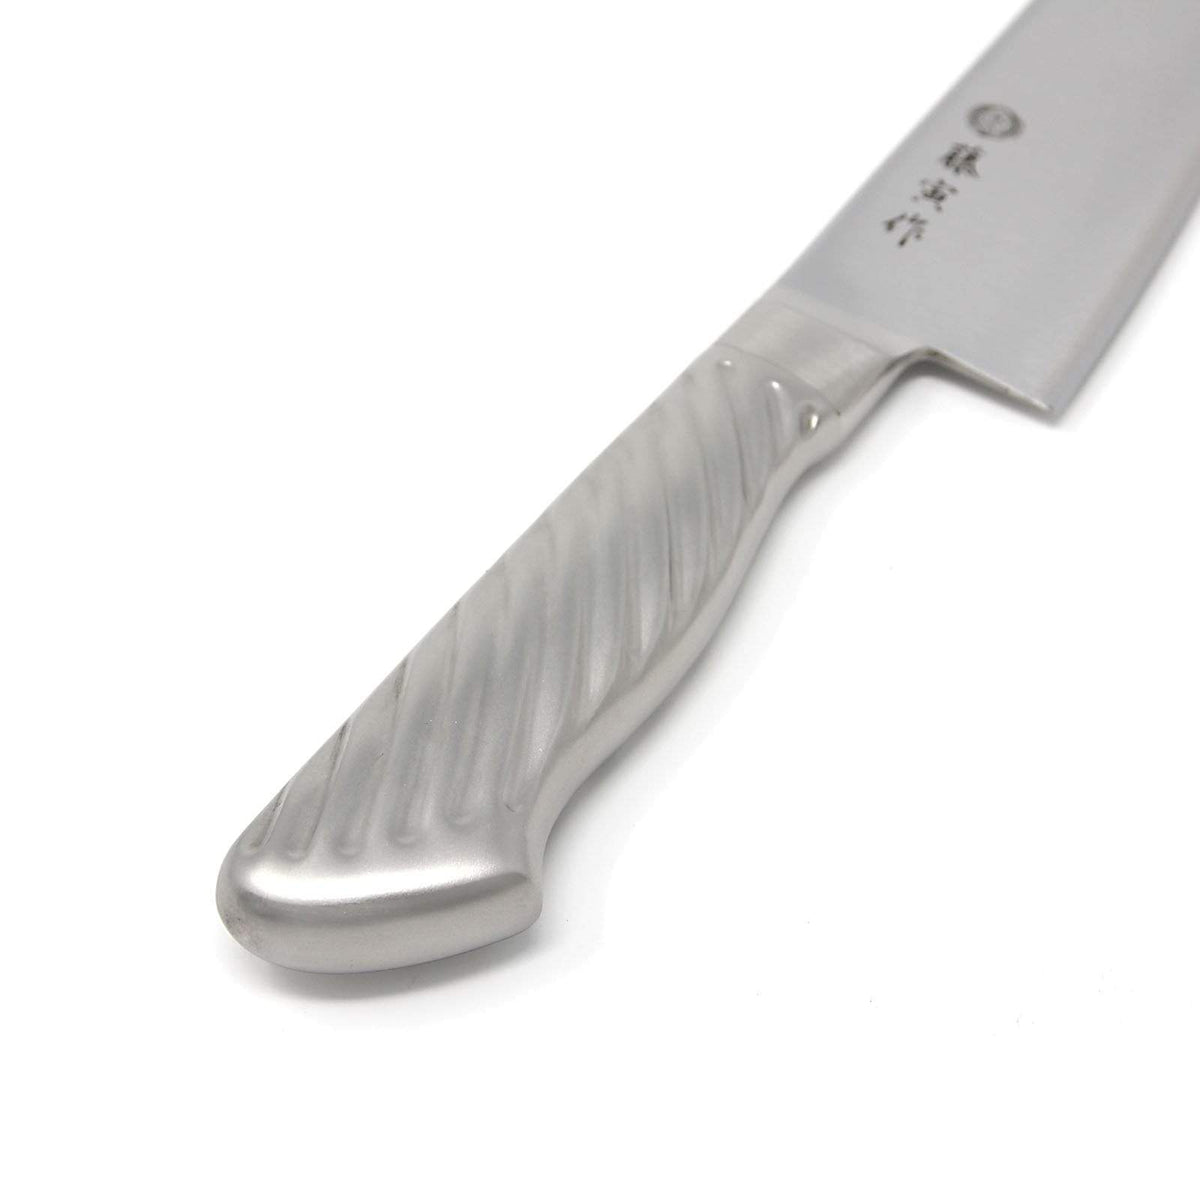 Tojiro Fujitora DP 3-Layer Western Deba Knife (Yo-Deba) with Stainless Steel Handle Deba Knives